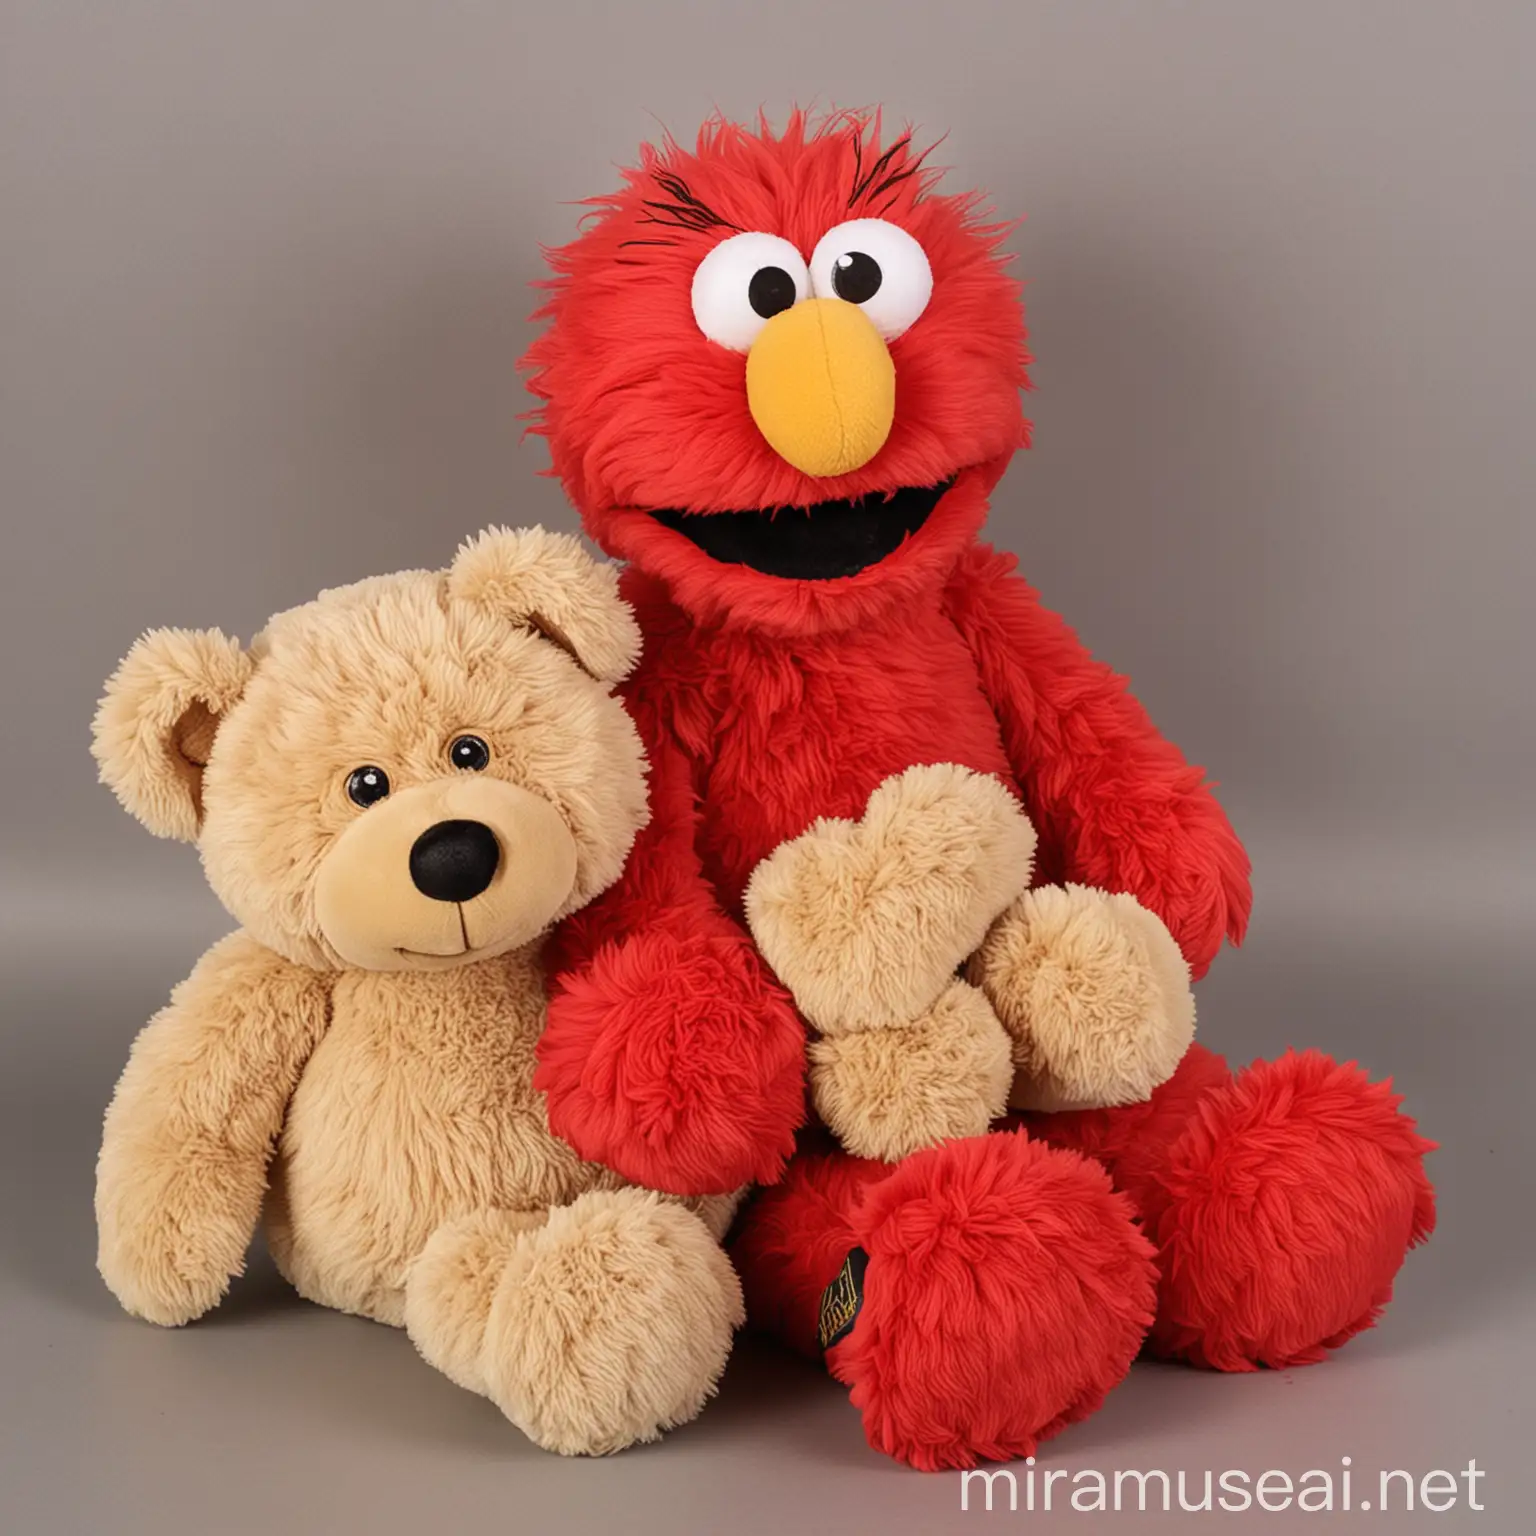 Adorable Elmo Holding a Teddy Bear Plush Toy